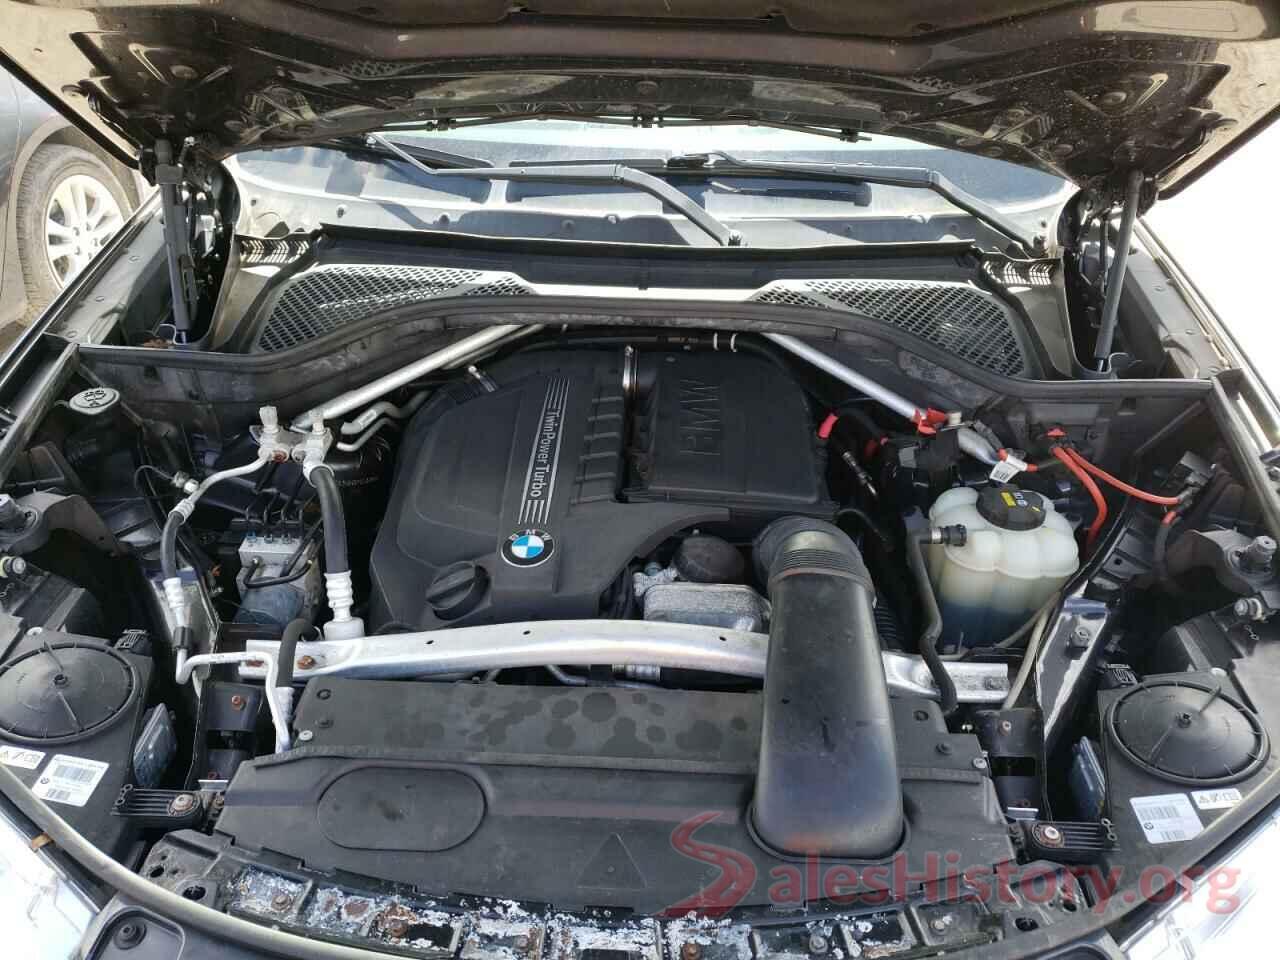 5UXKR0C52H0V65320 2017 BMW X5